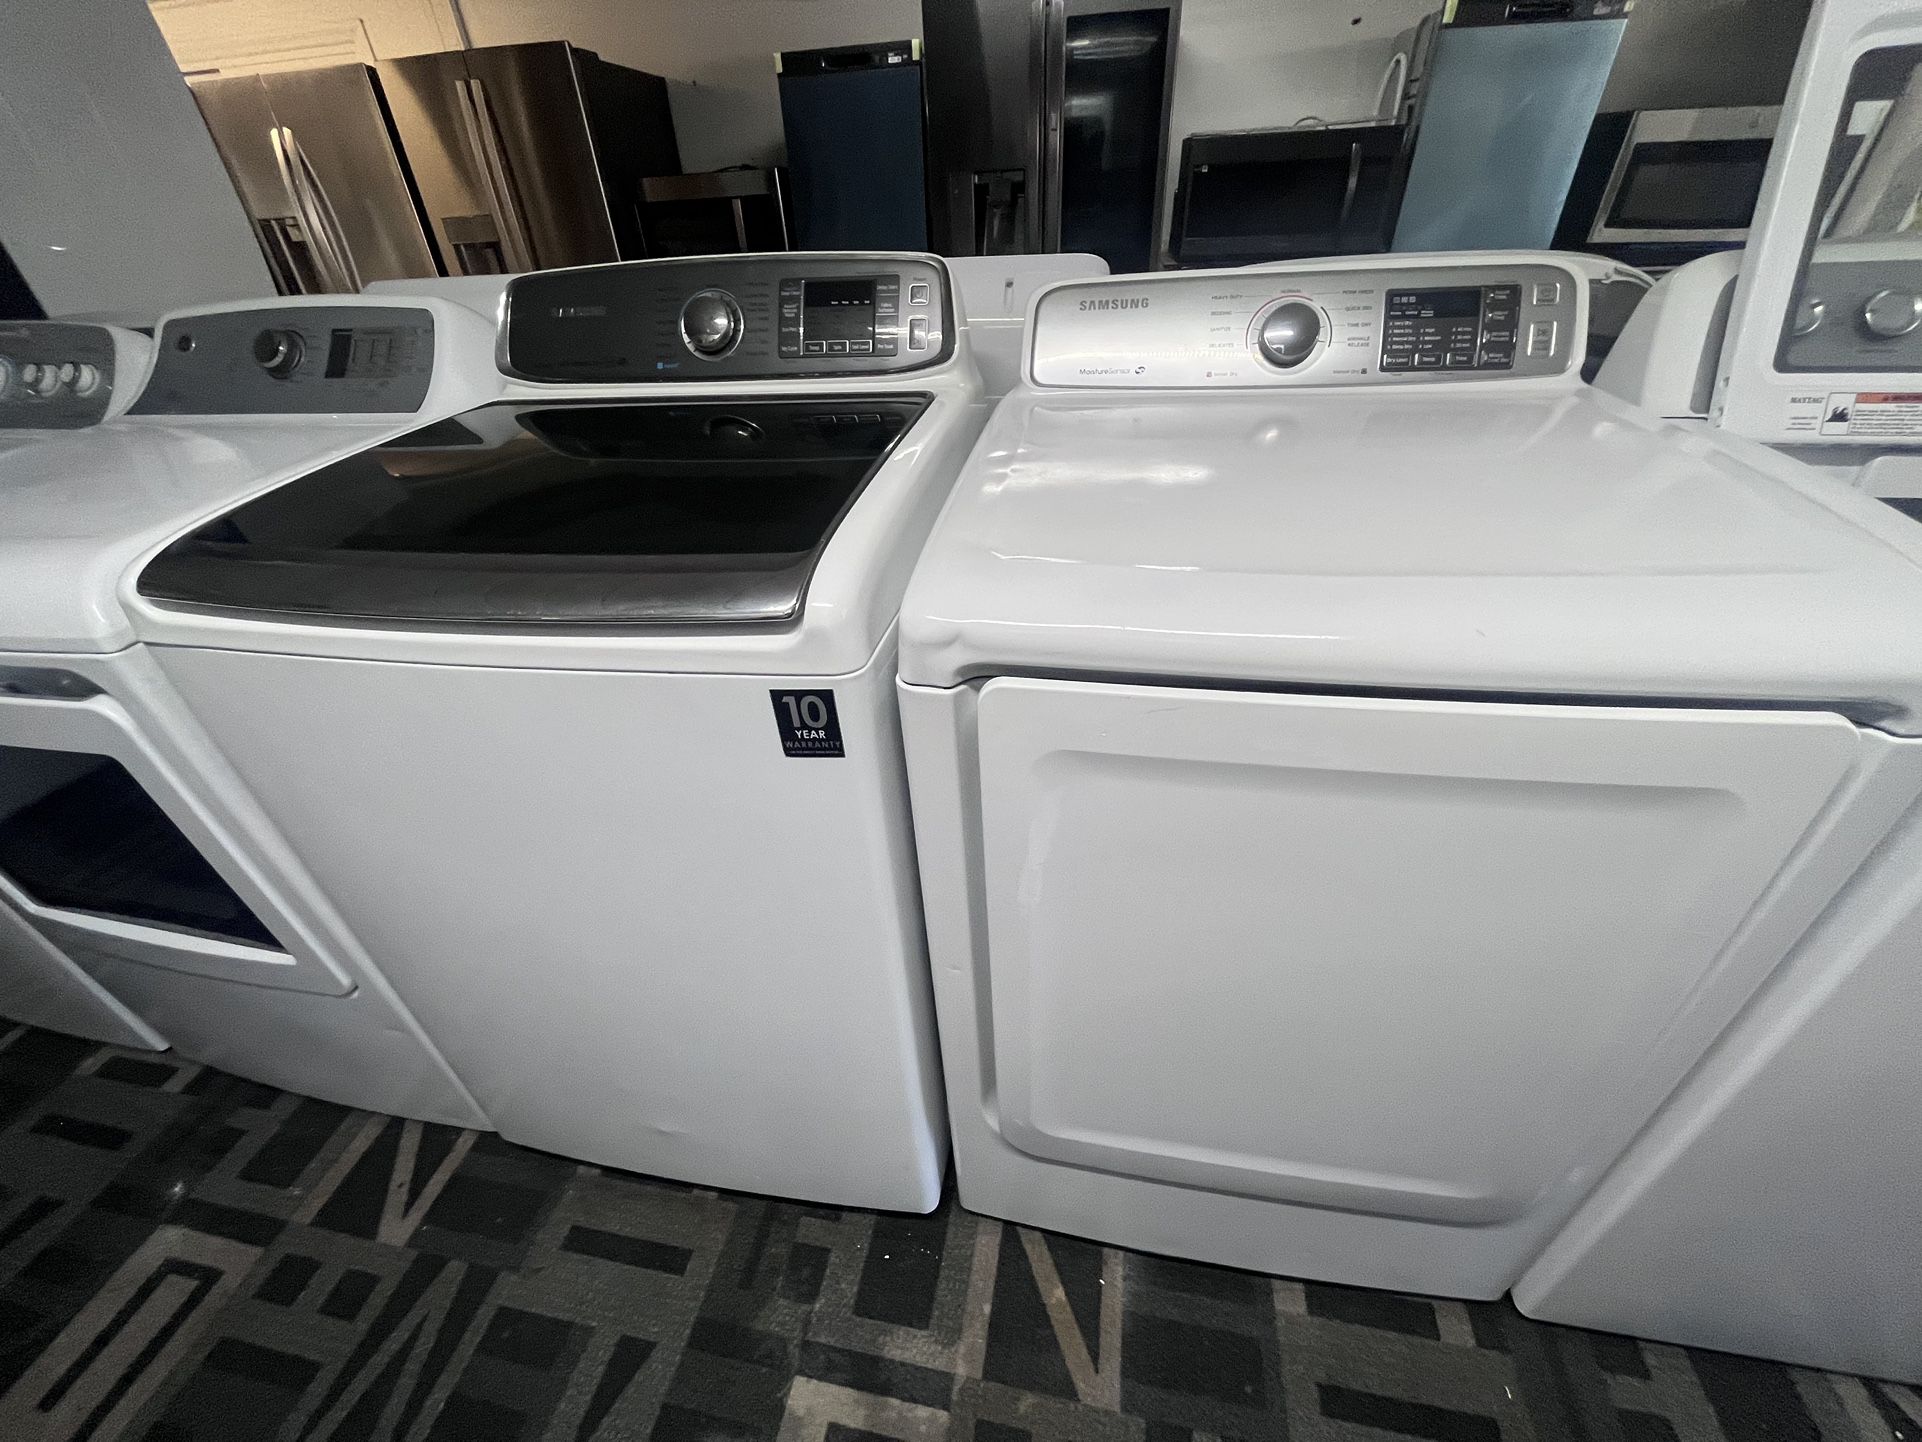 Samsung Top Loader Washer And Dryer 